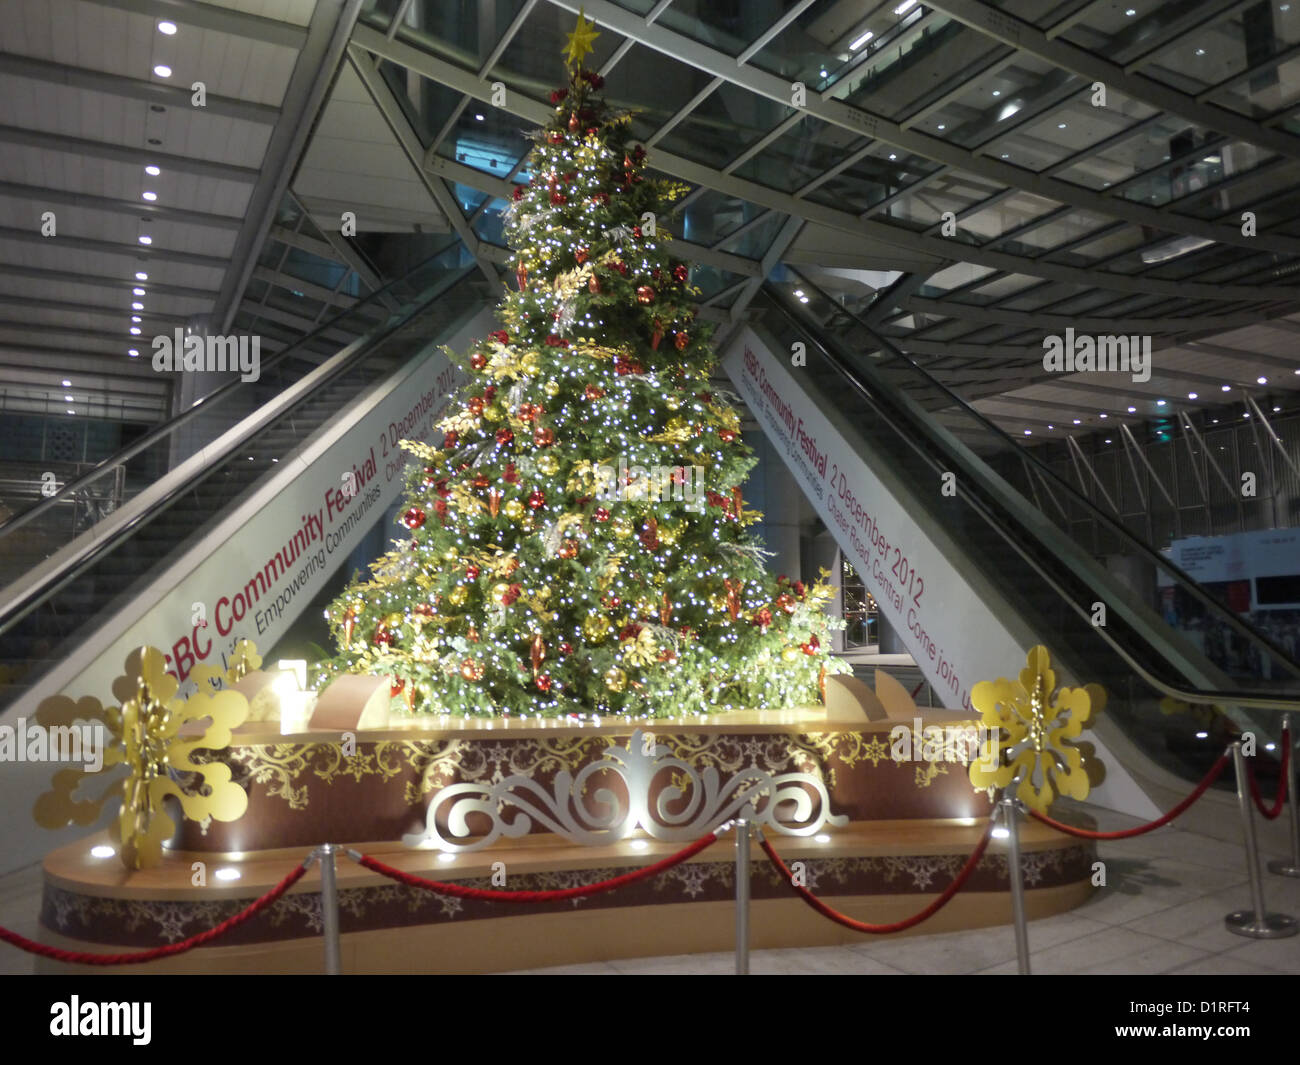 tall Christmas tree indoor escalator Stock Photo